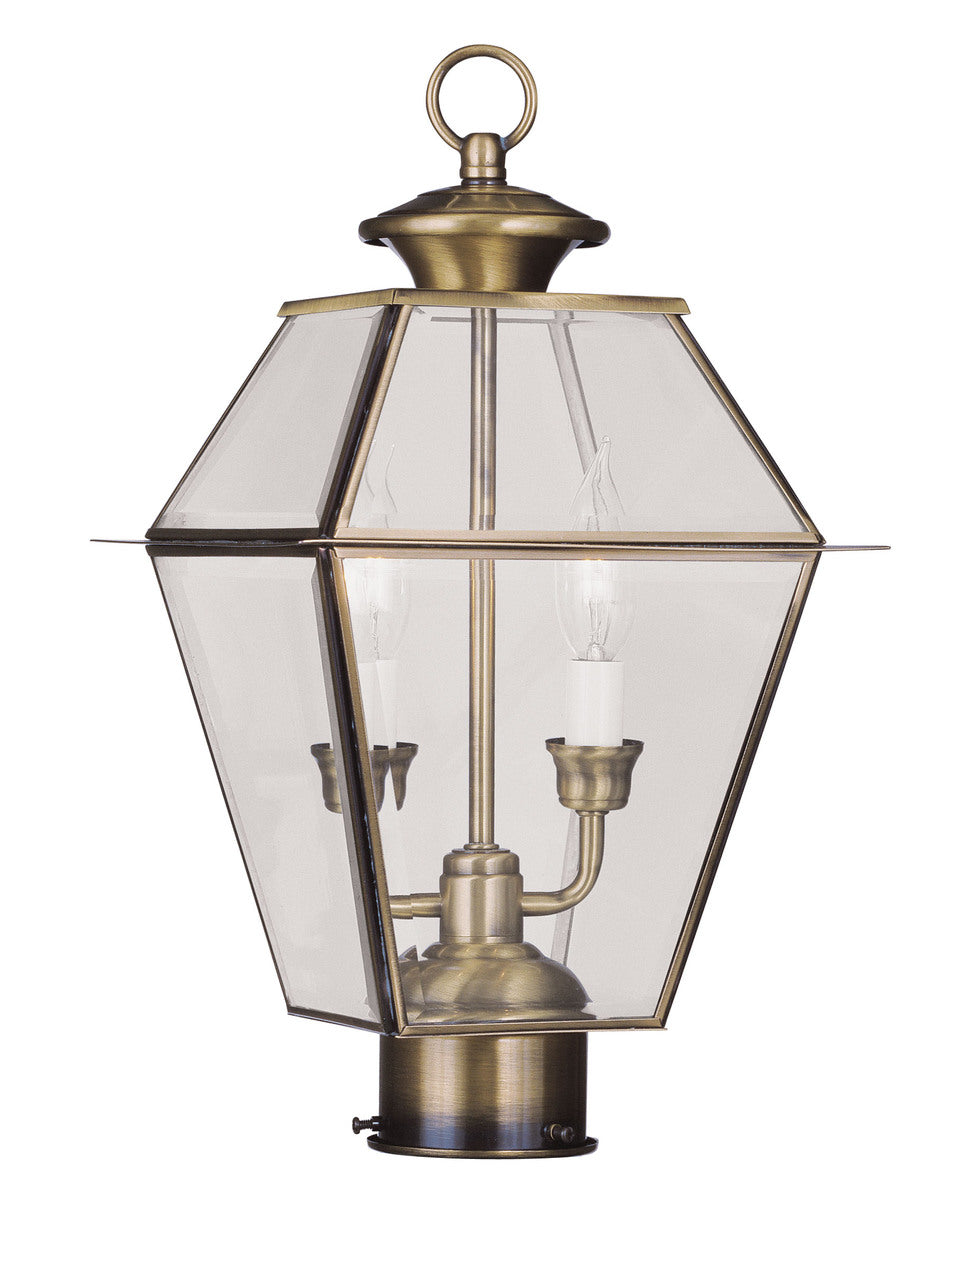 LIVEX Lighting 2284-01 Westover Outdoor Post Lantern in Antique Brass (2 Light)